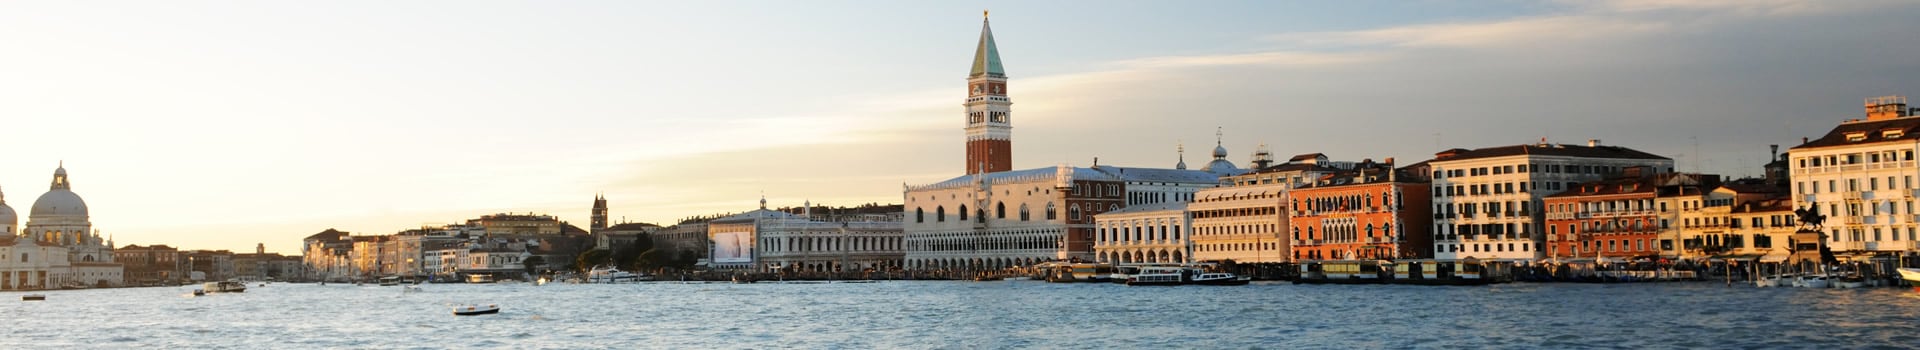 La romana - Venedig